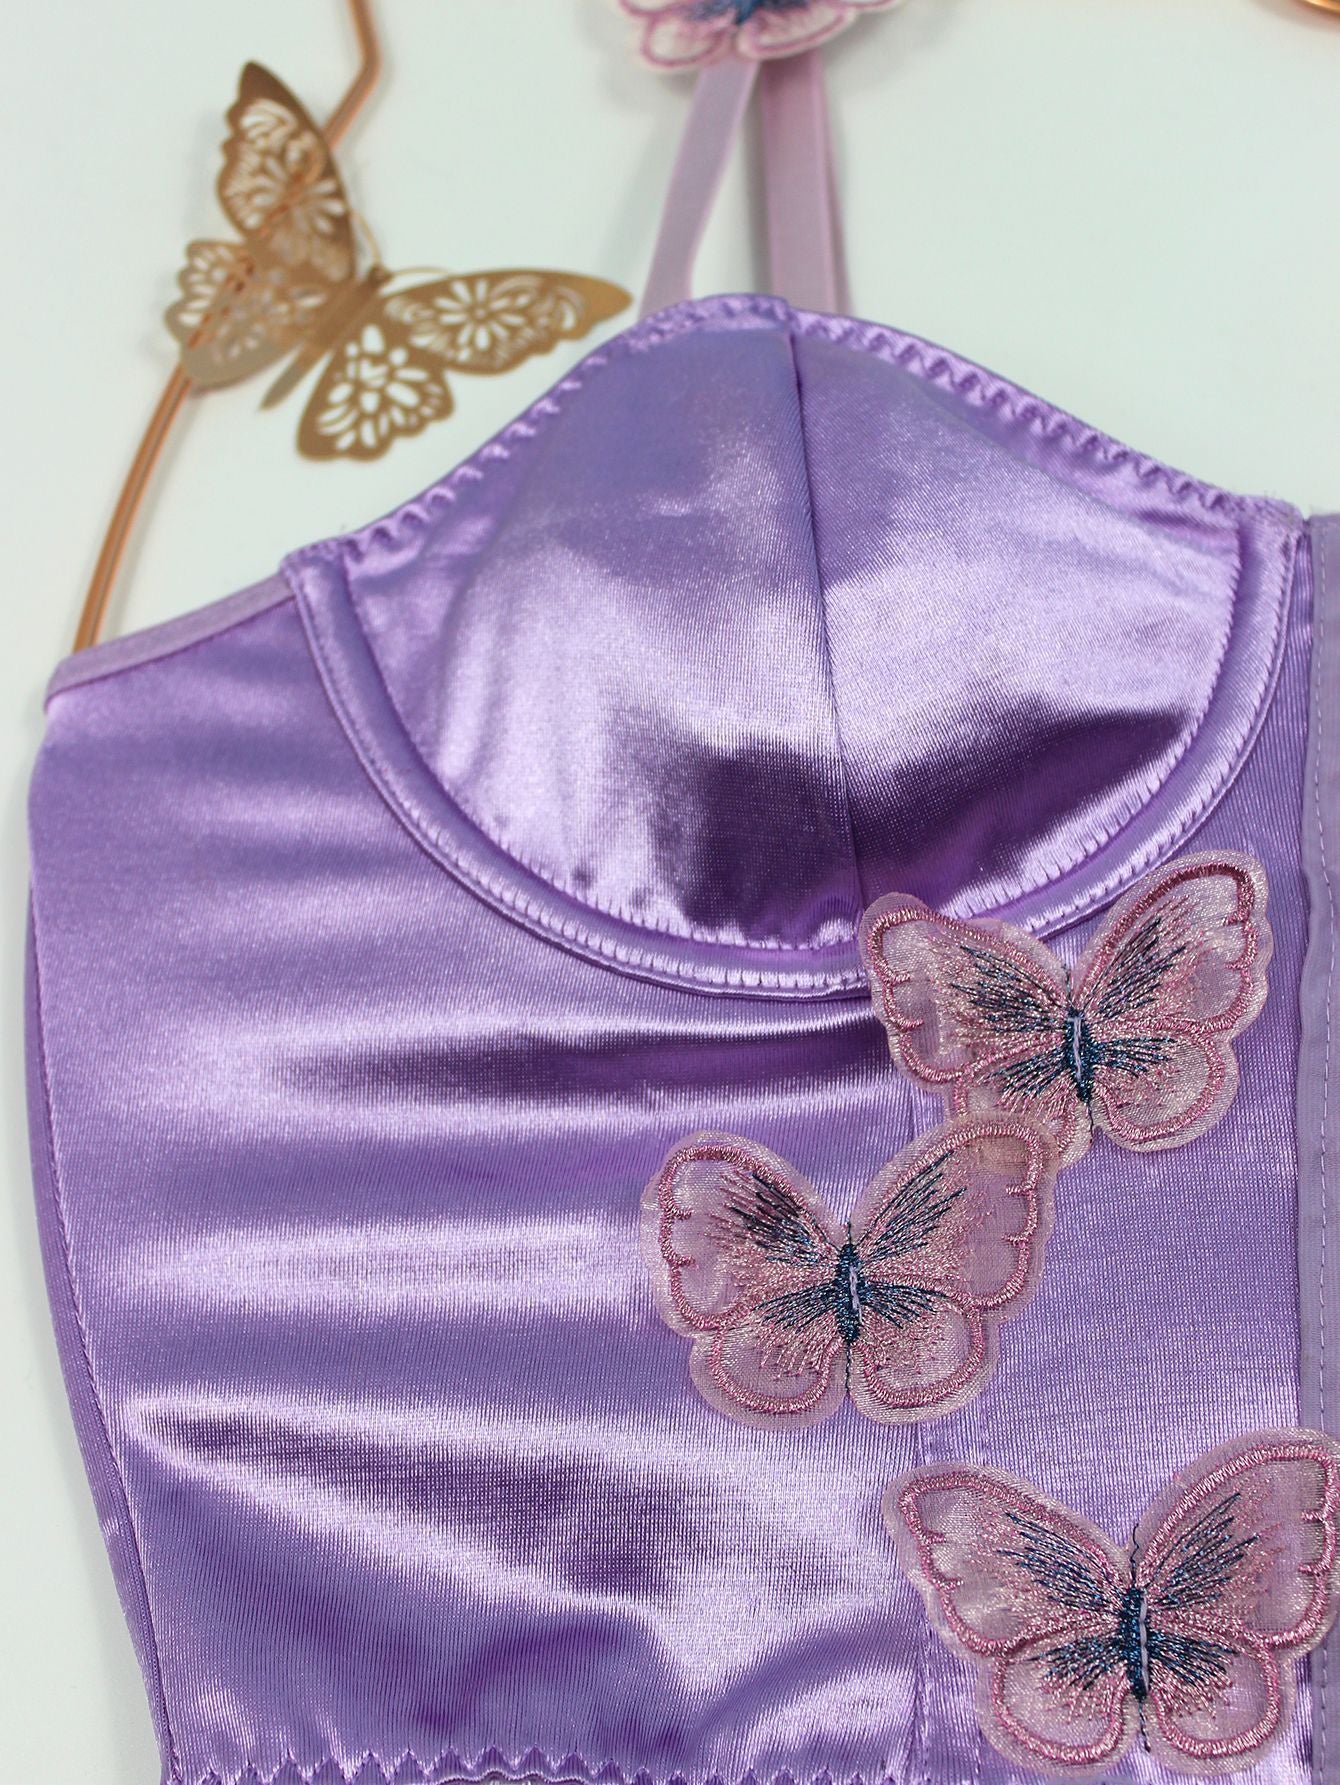 Butterfly Decor Lace Up Shapewear Top Corset Bra Vest